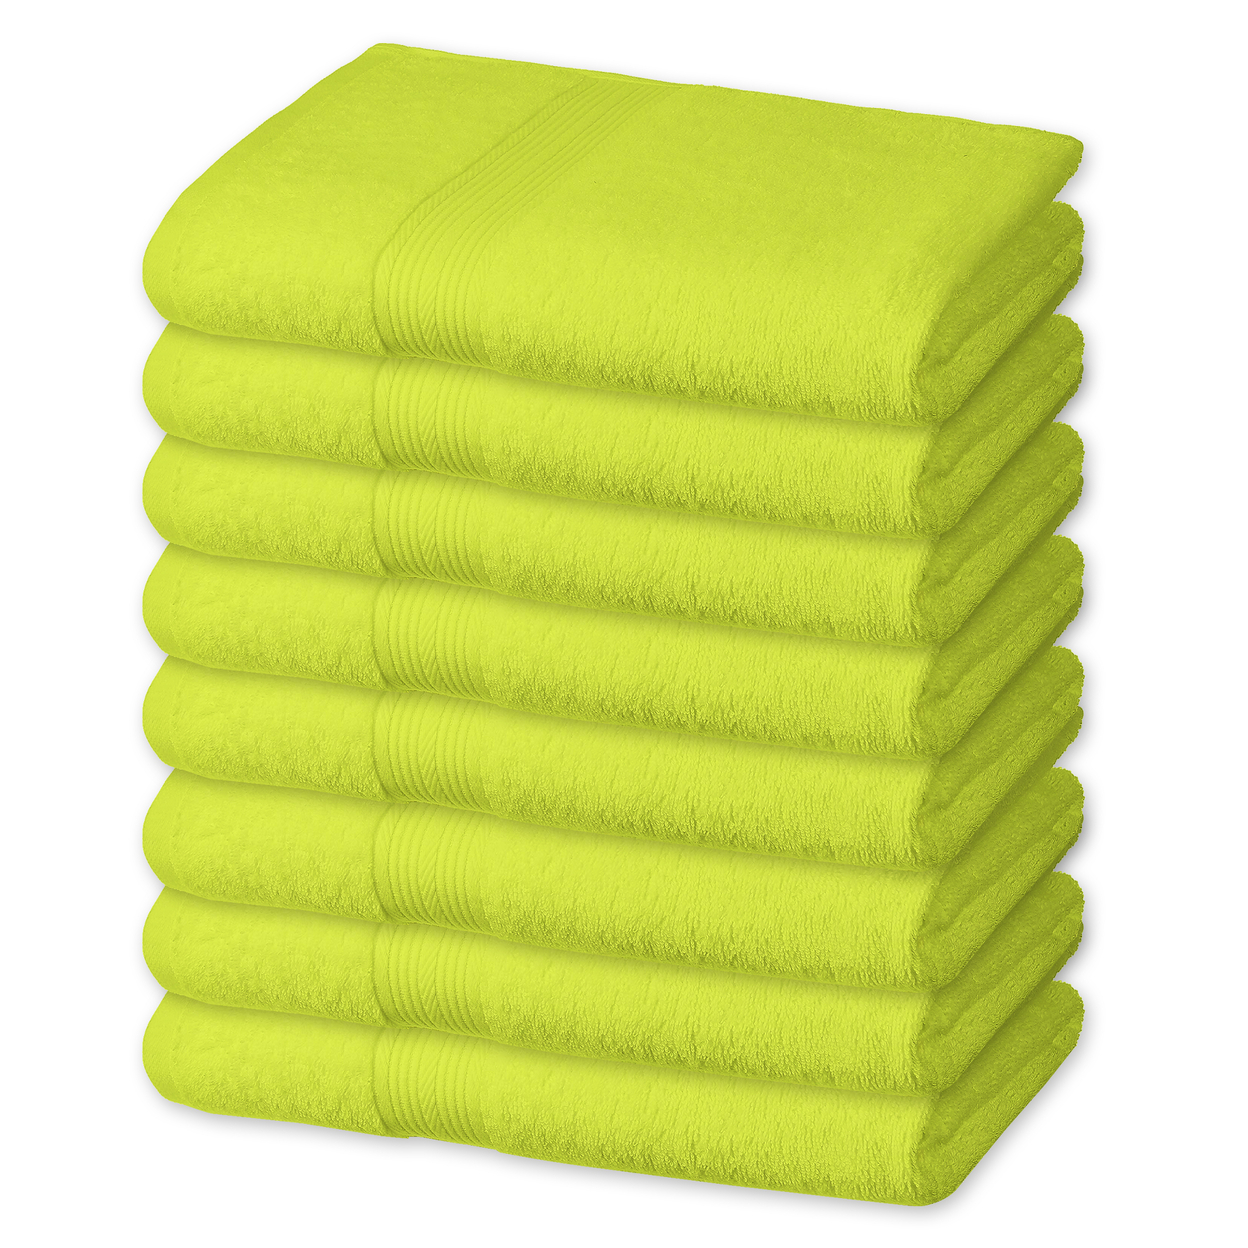 Super Absorbent 100% Cotton 54 X 27 Hotel Beach Bath Towels - Green